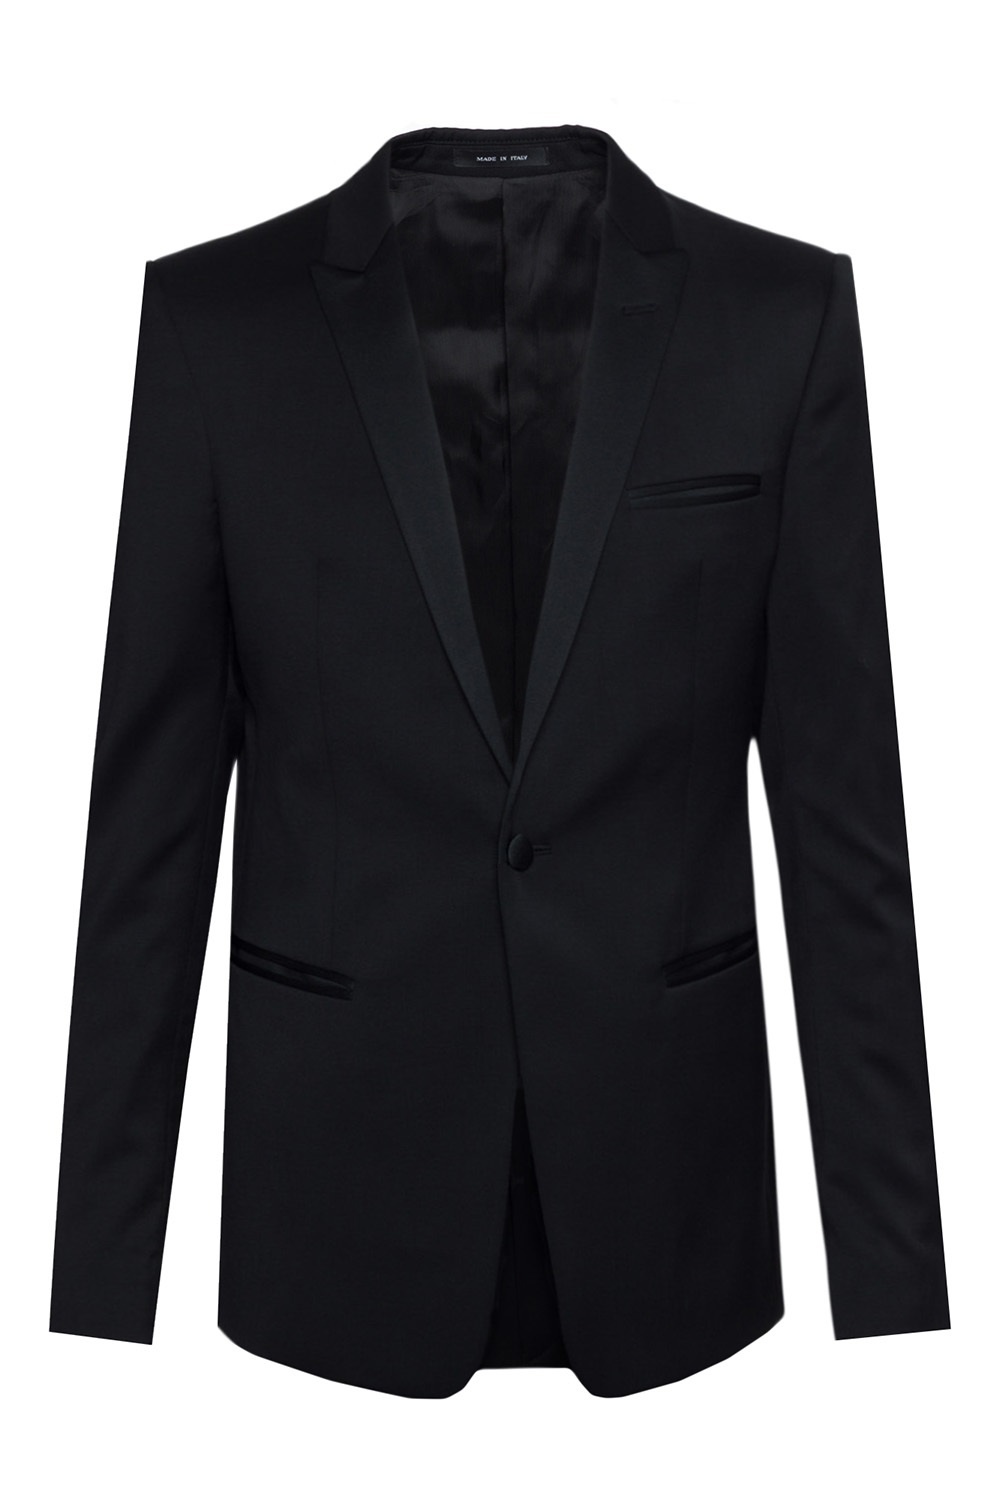 Emporio Armani Tuxedo suit | Men's Clothing | Vitkac